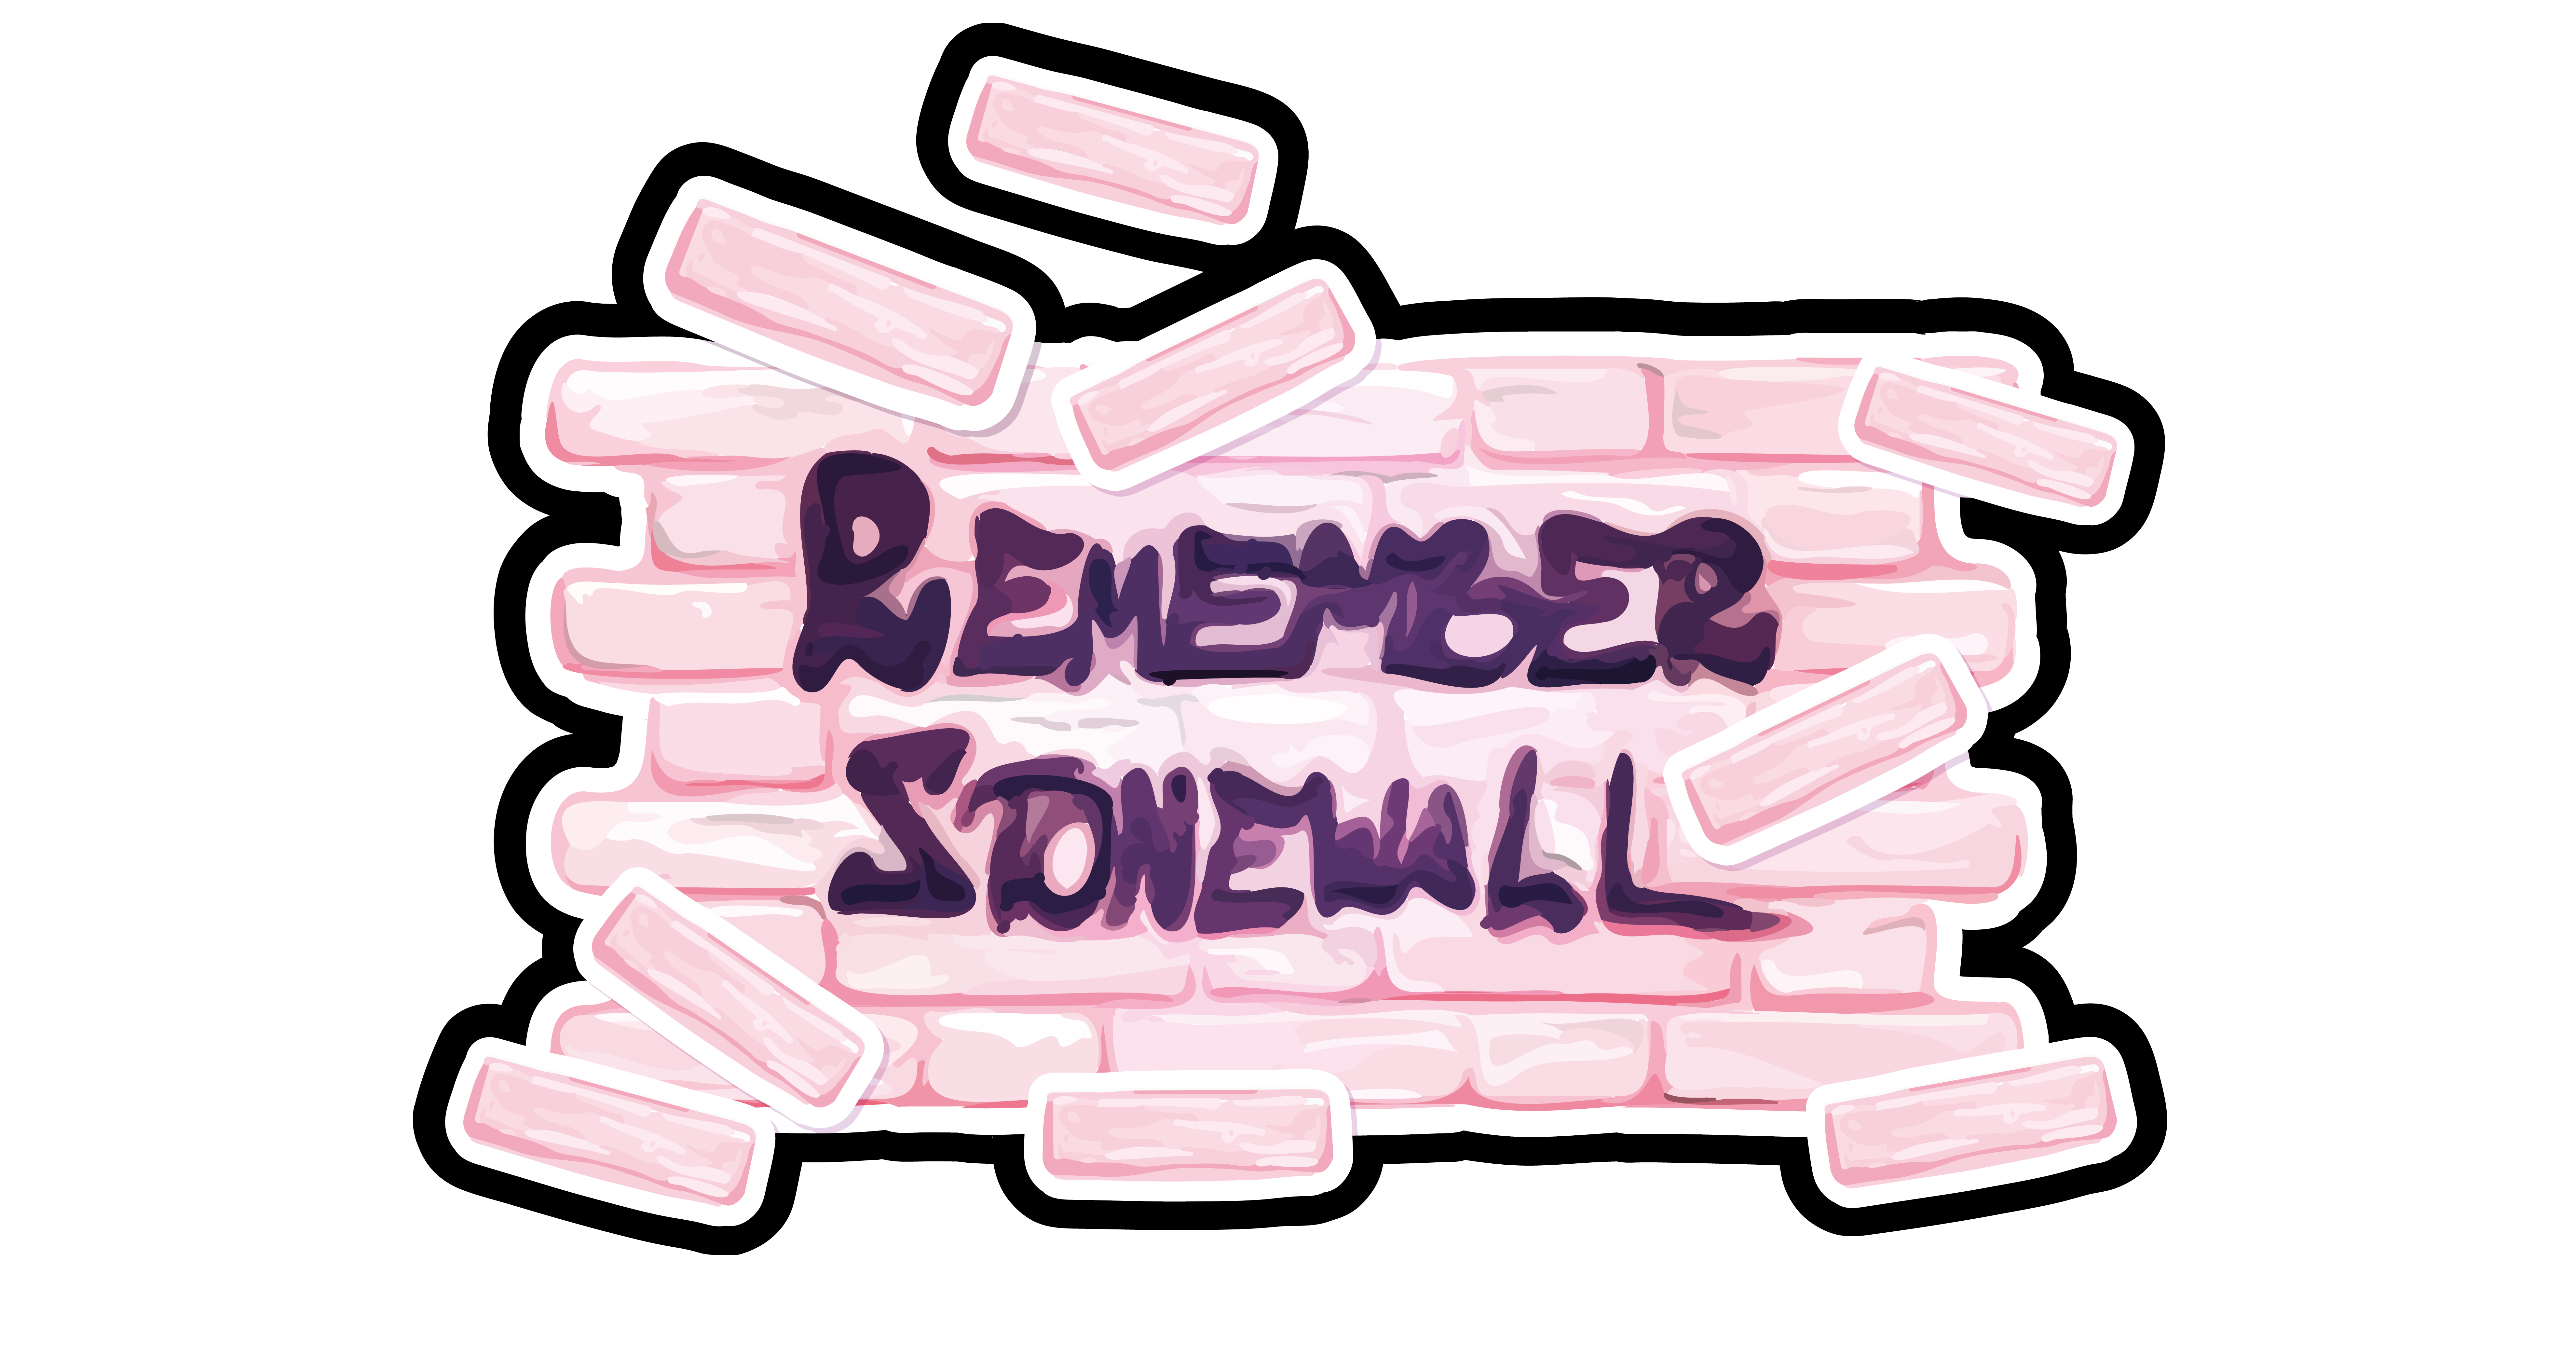 Remember Stonewall